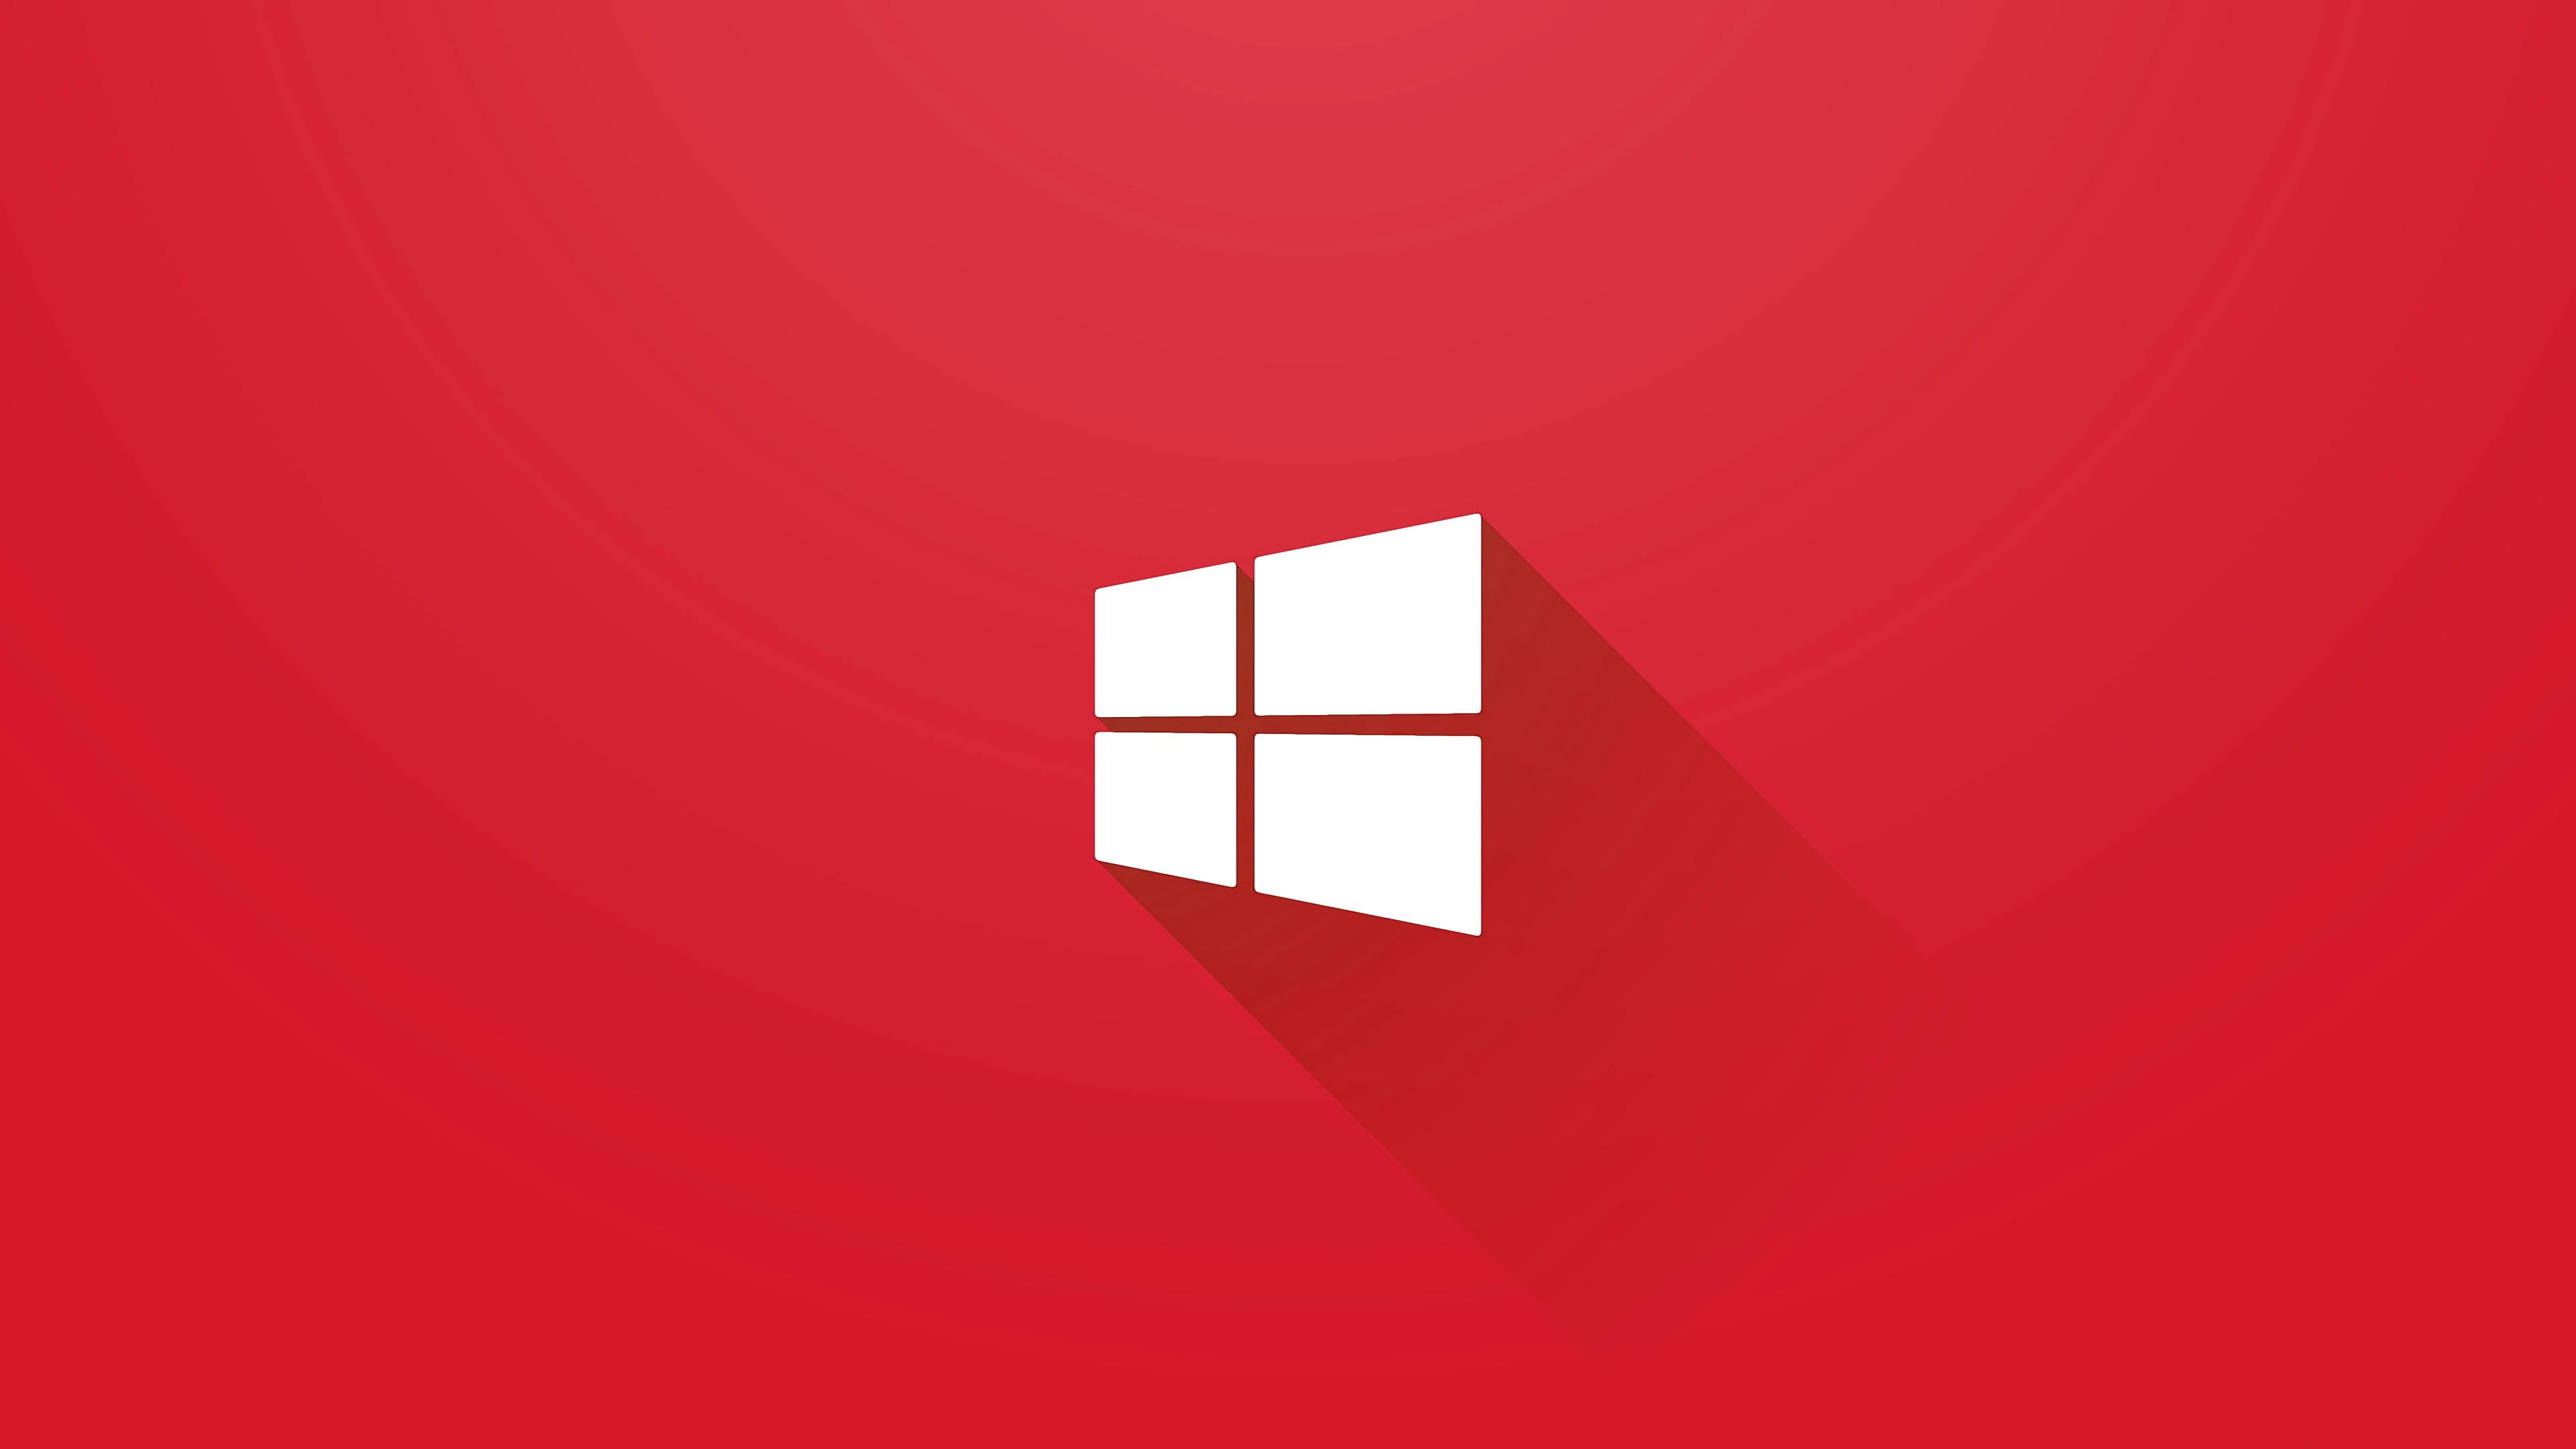 Microsoft Windows logo, Windows 10, brand, red, no people, copy space